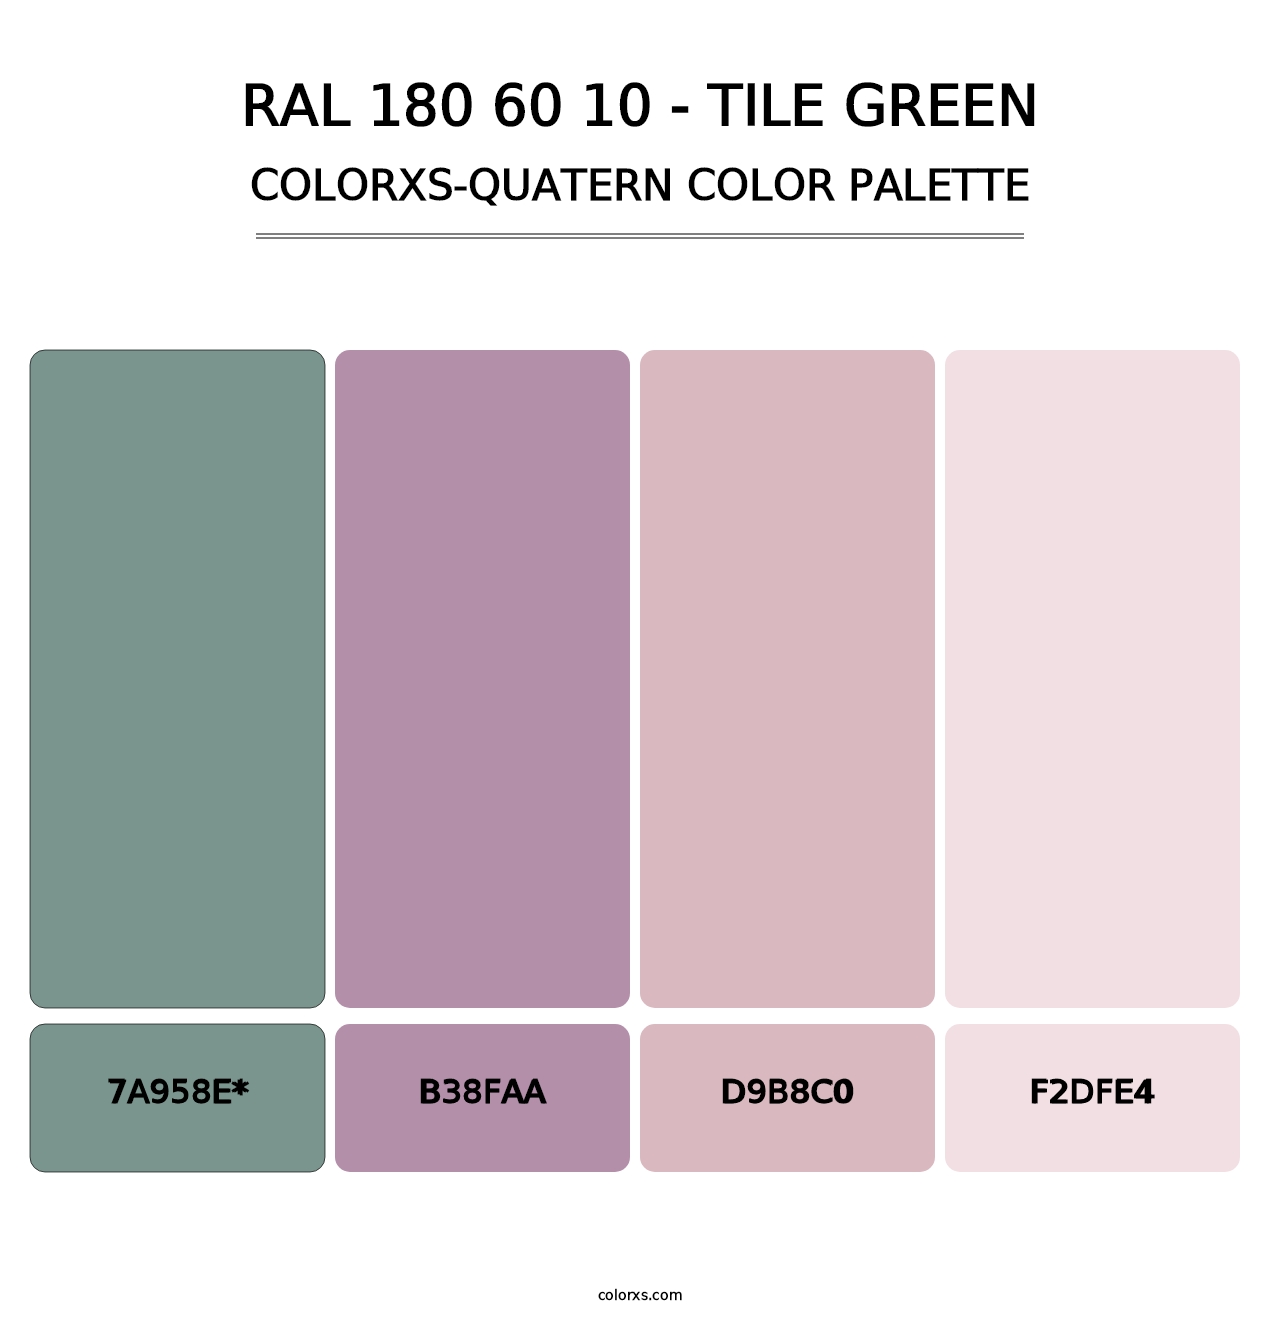 RAL 180 60 10 - Tile Green - Colorxs Quatern Palette